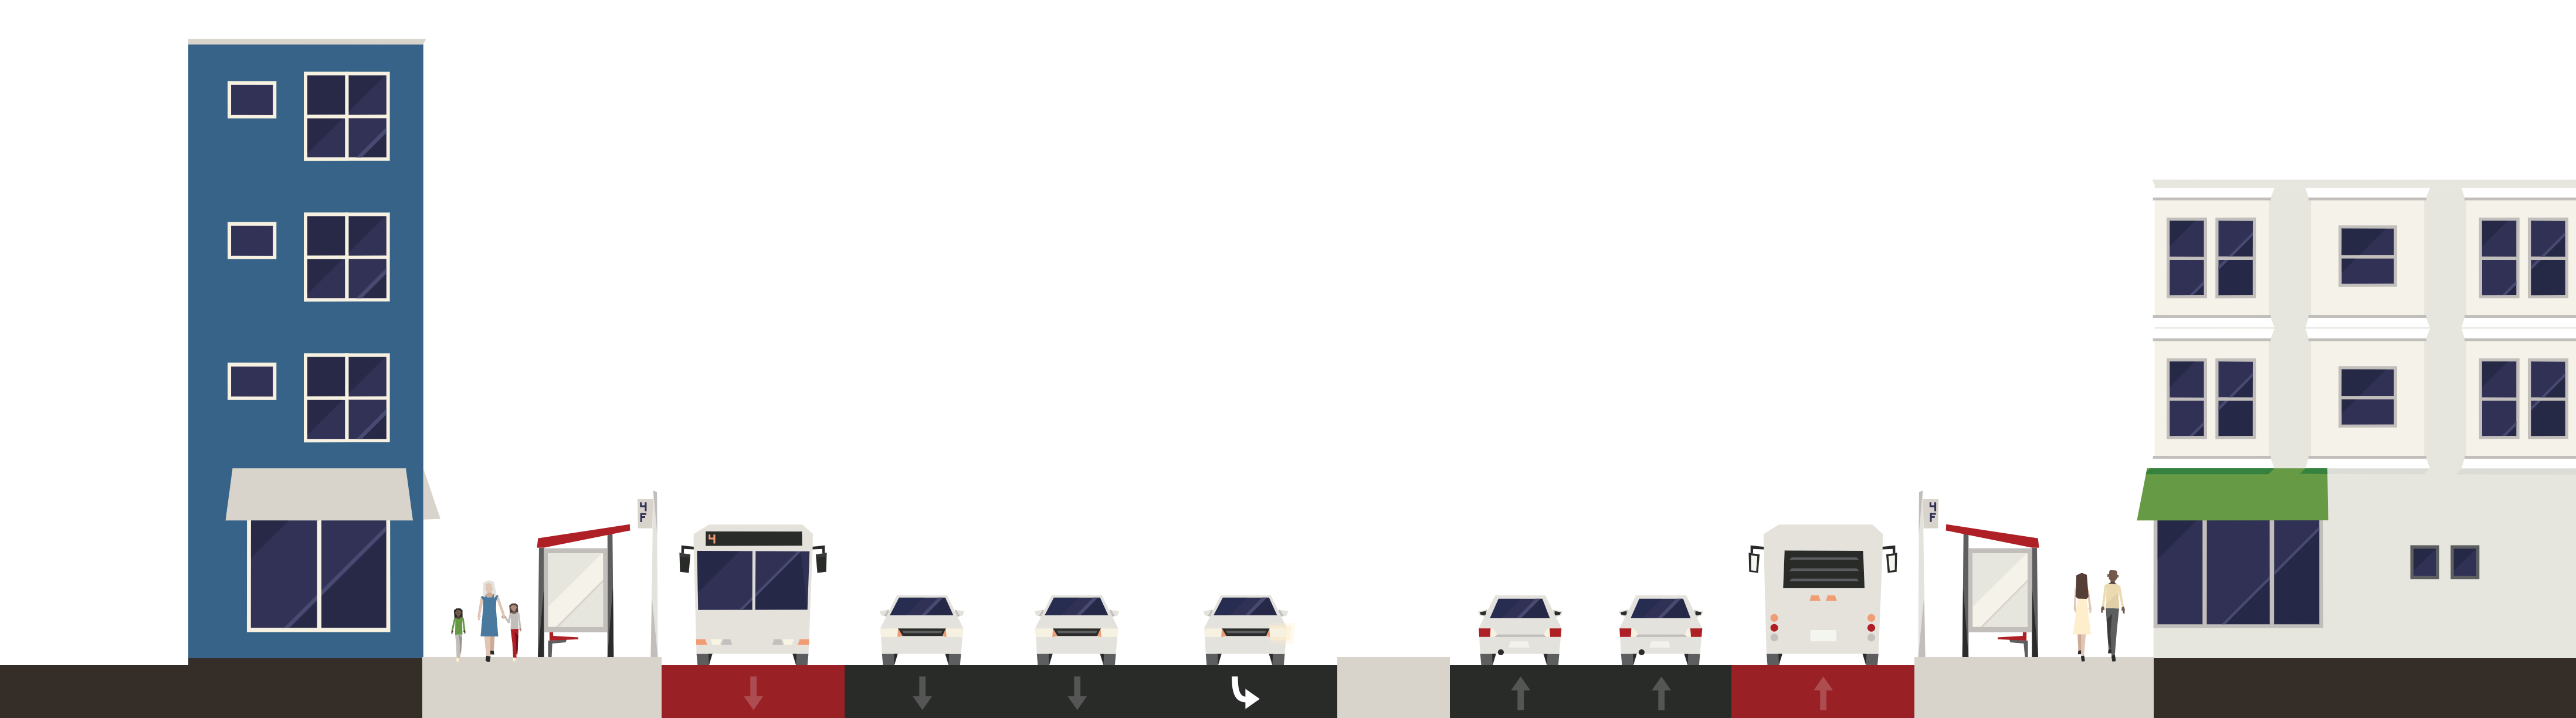 Proposed lane example